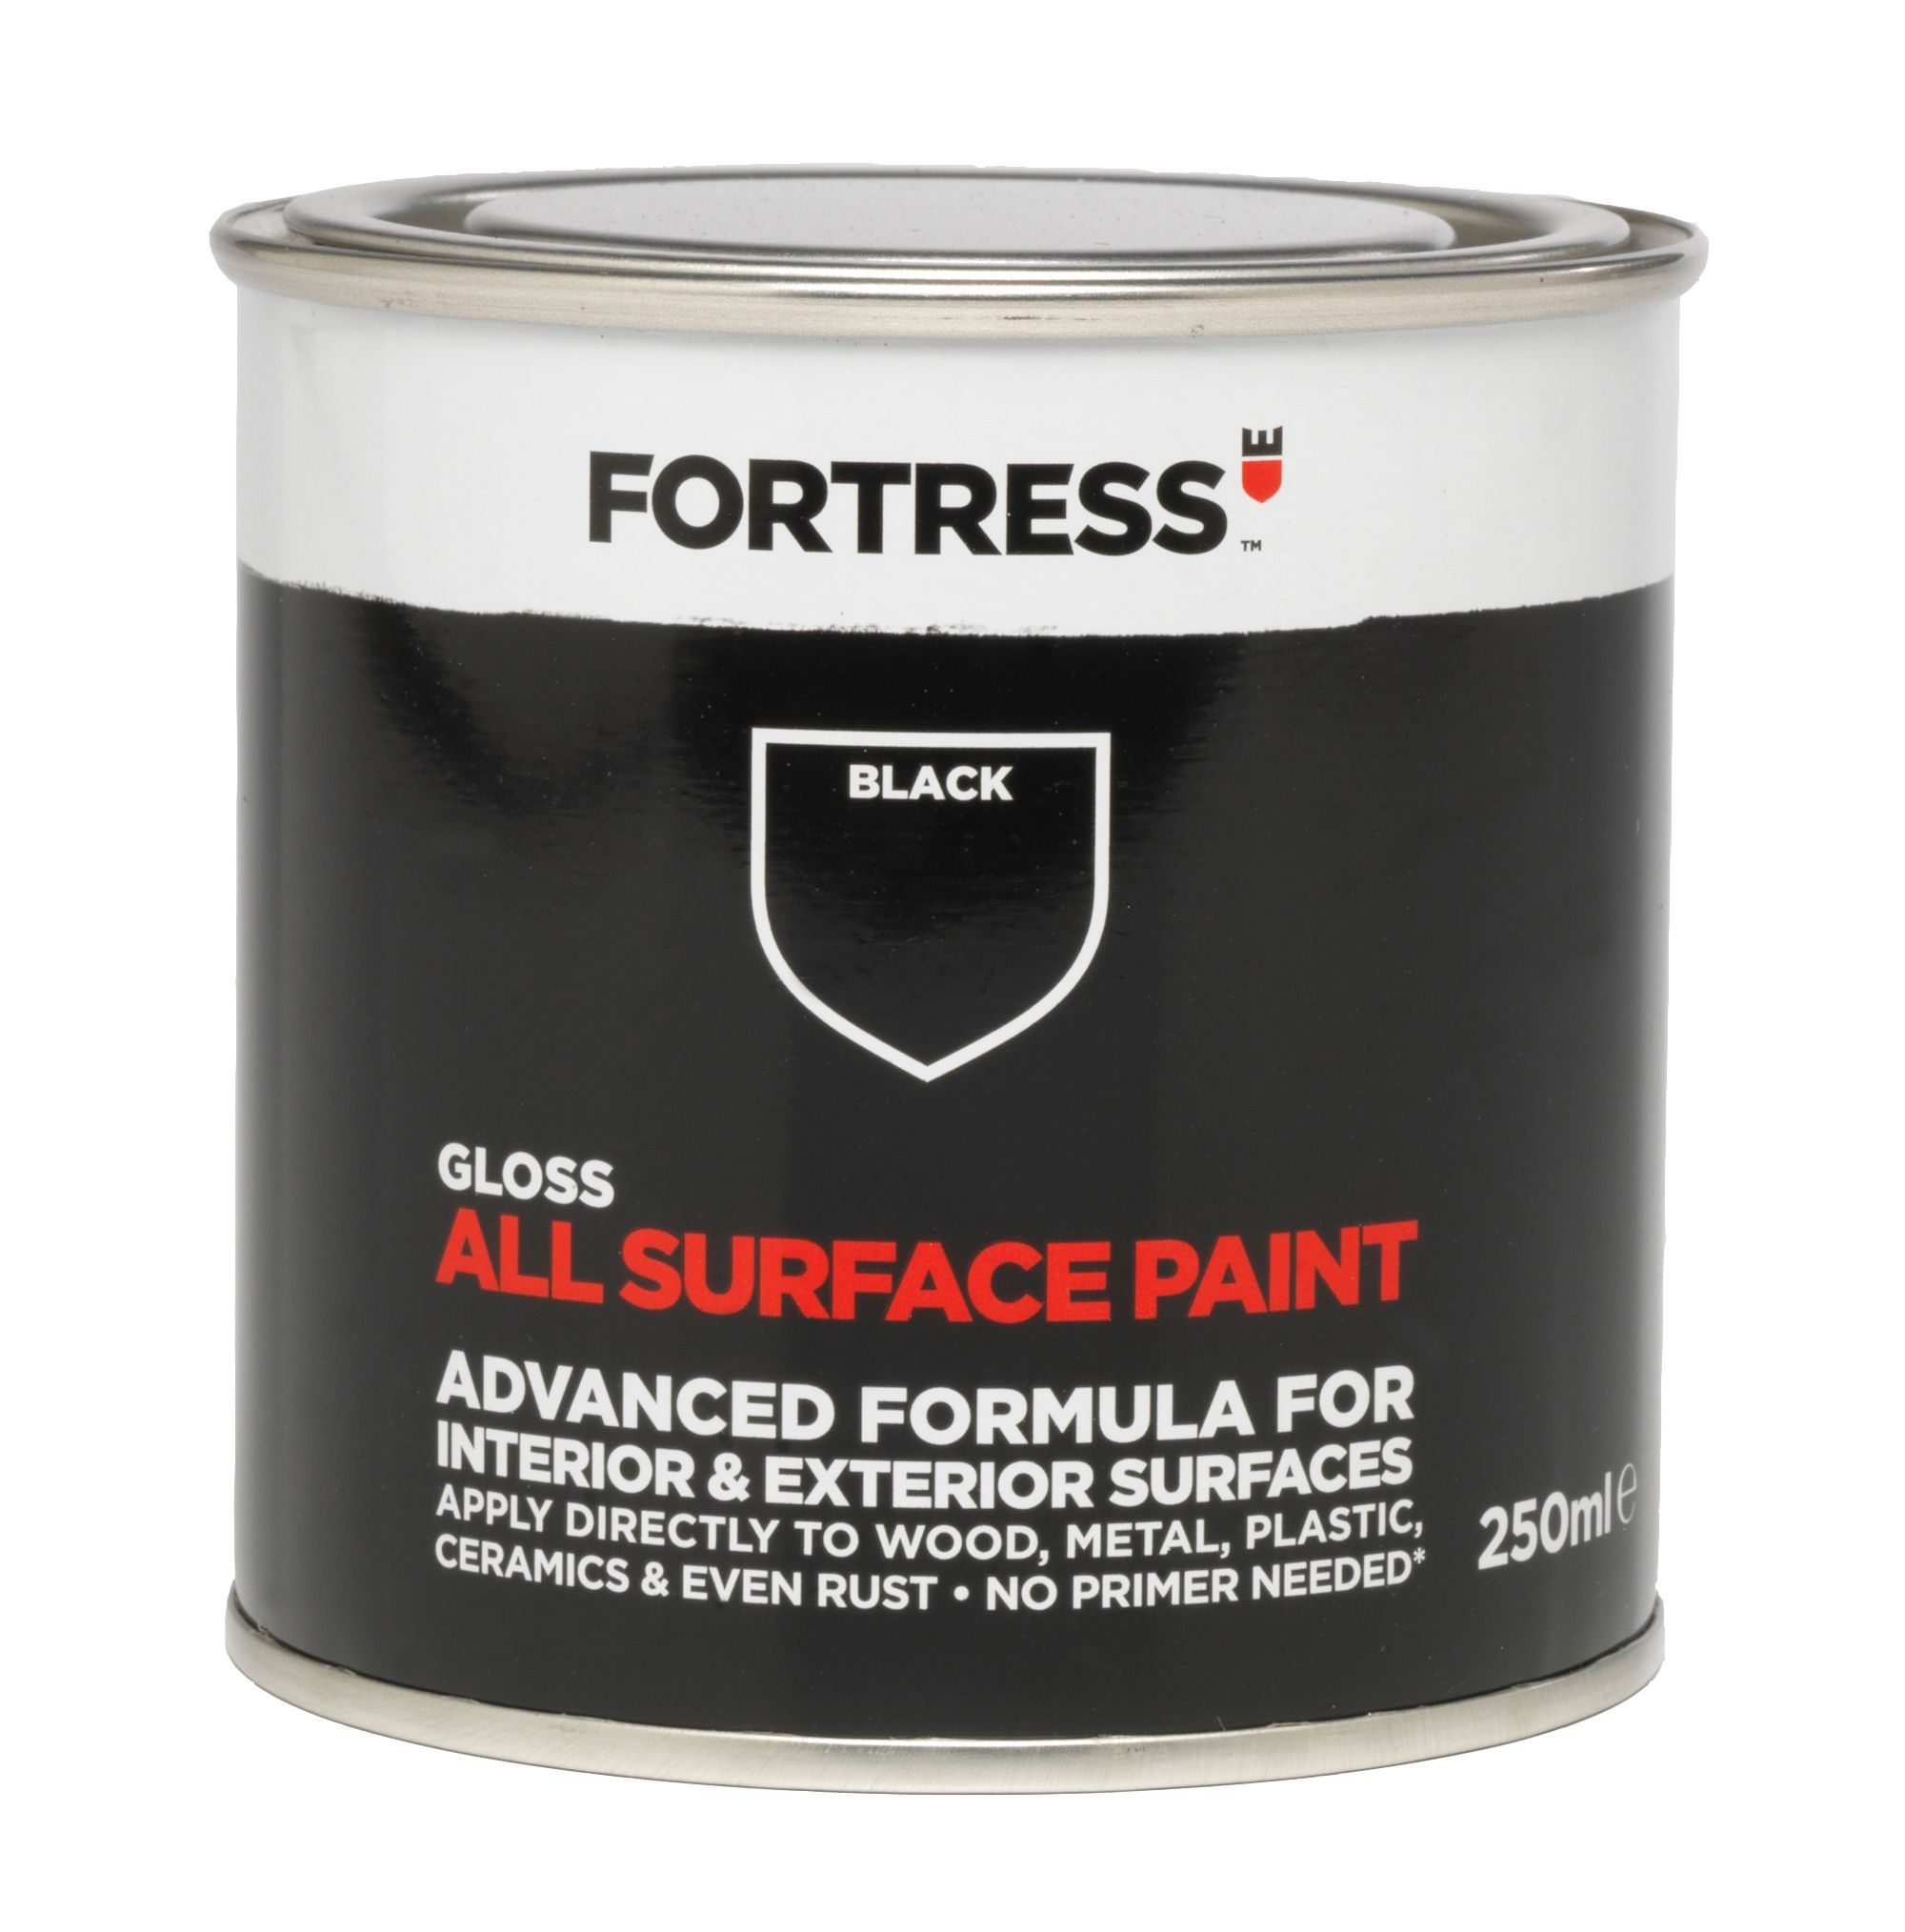 Fortress Black Gloss Multi-Surface Paint, 250Ml